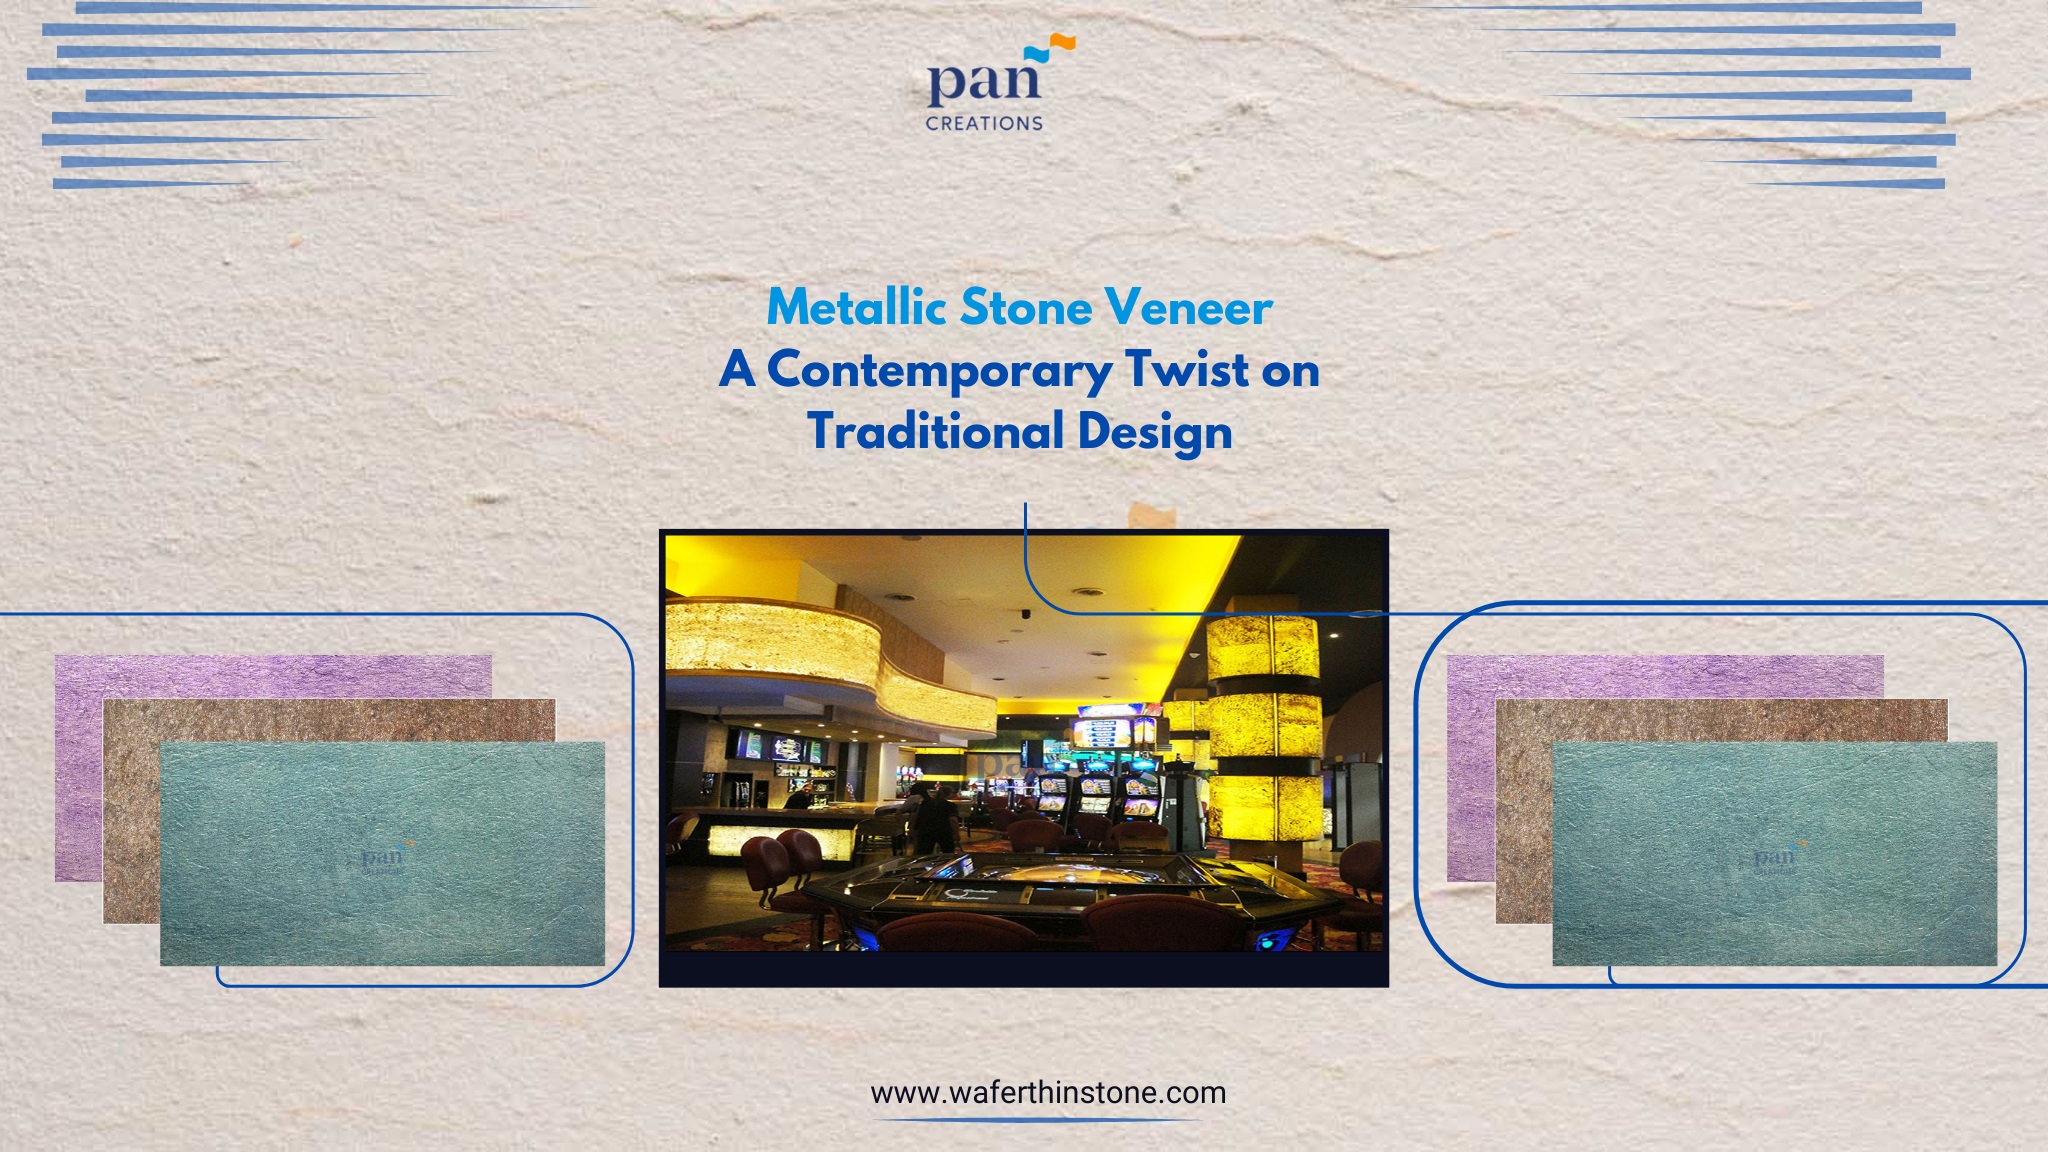 Metallic Stone Veneer: A Contemporary Twist on Traditional Design